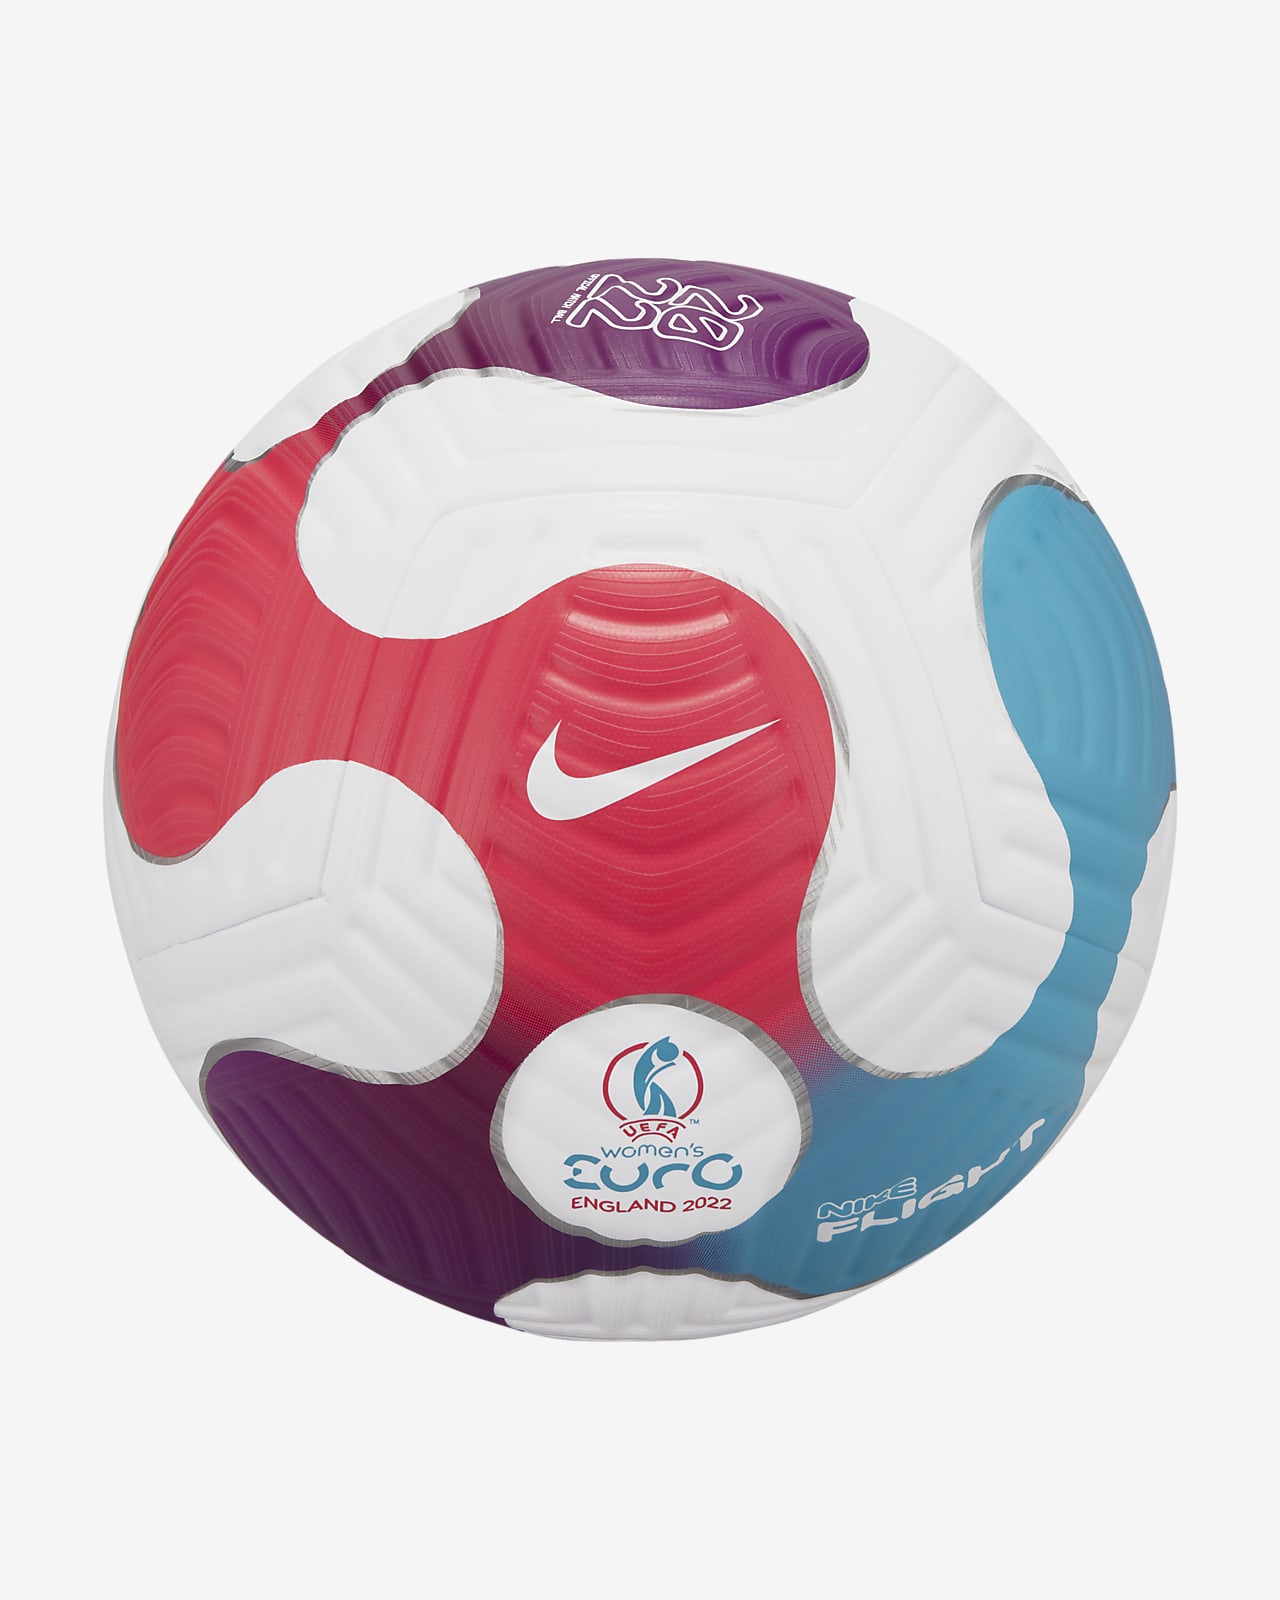 UEFA Women's EURO 2022 Nike Flight Voetbal